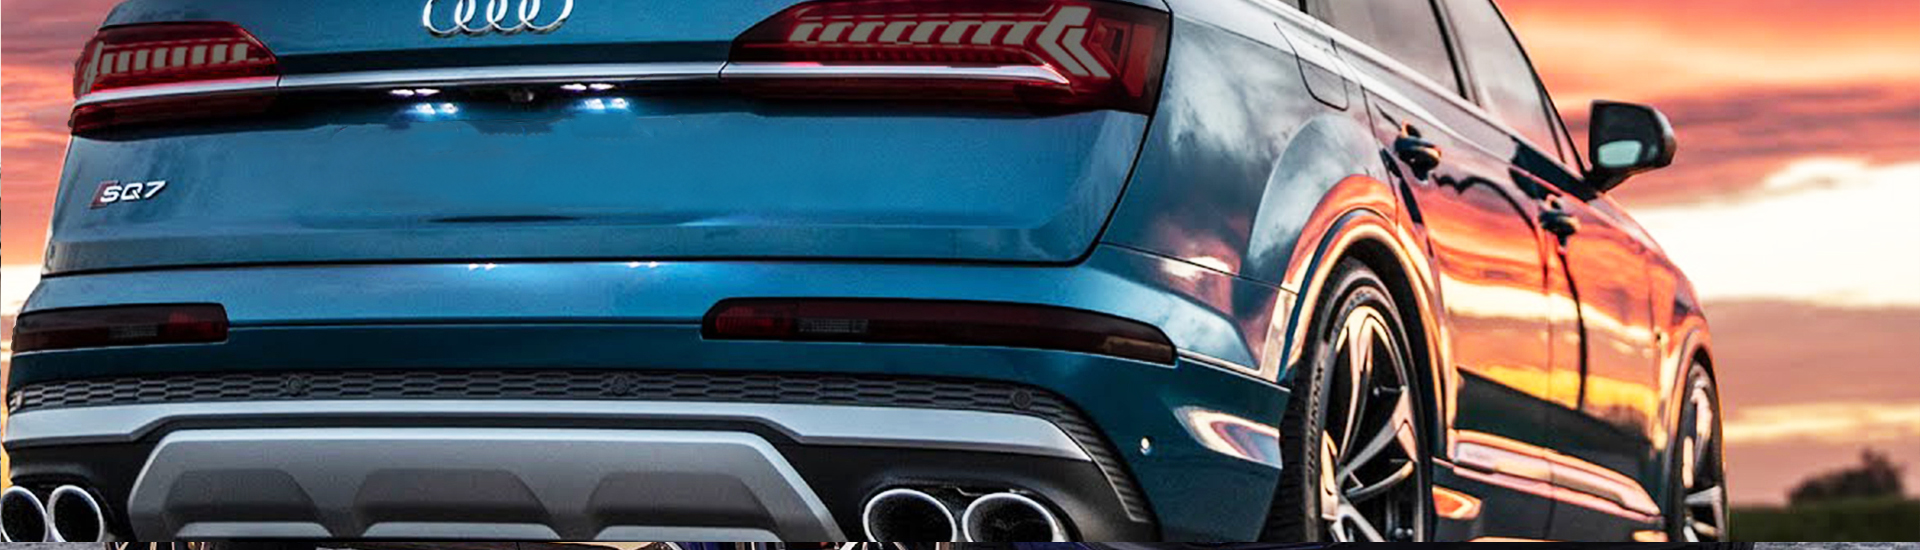 Audi SQ7 Tail Light Tint Covers